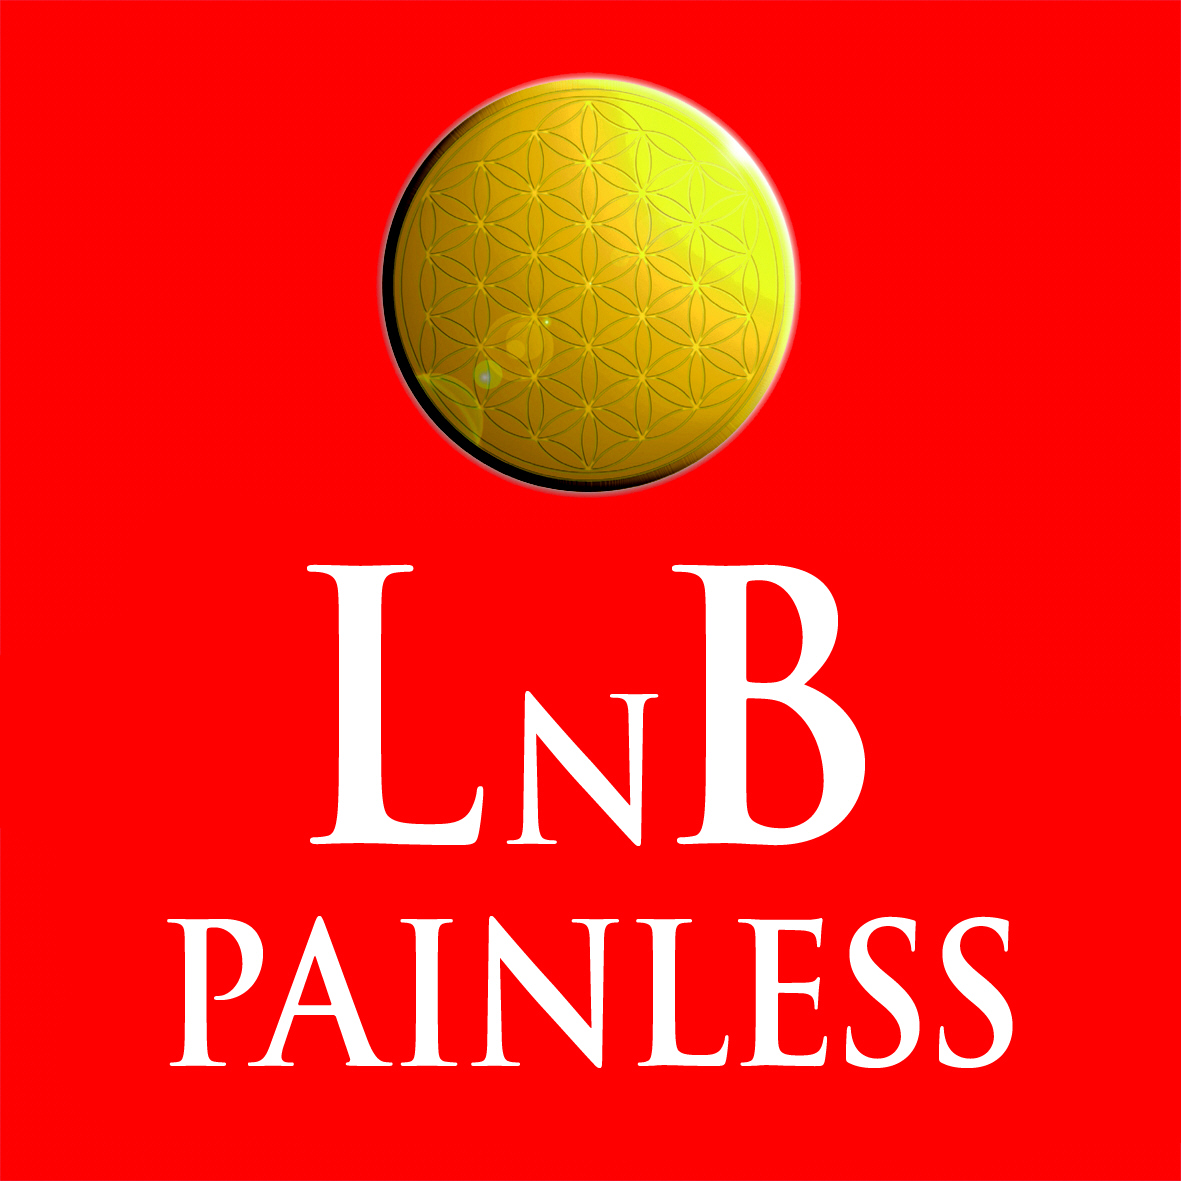 LnB-Logo-Painless-4c-10x10-bold04